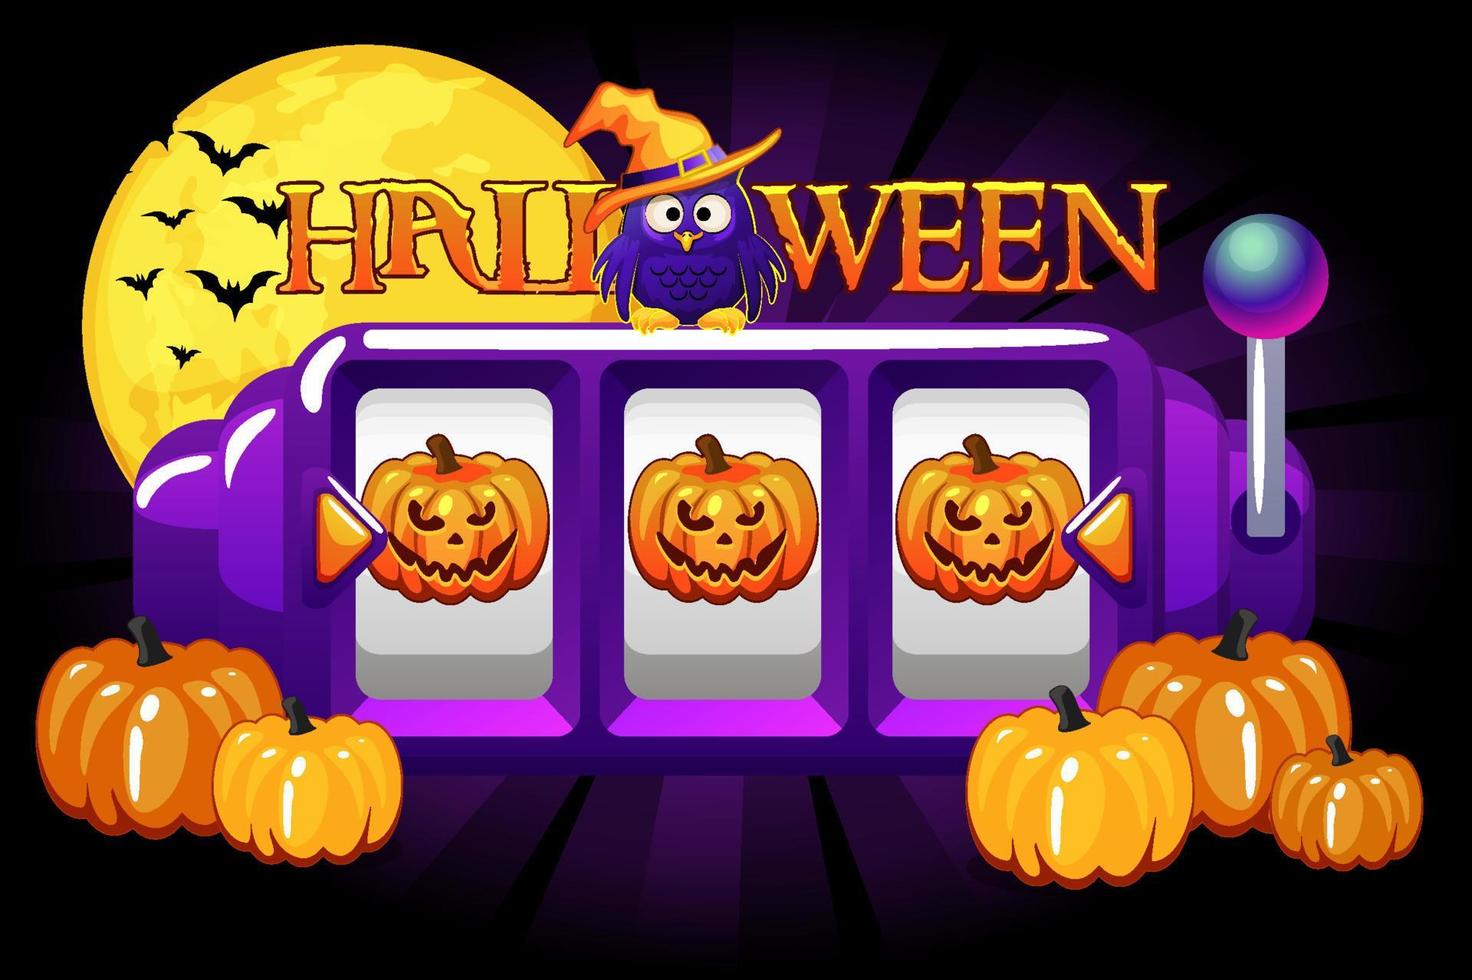 Halloween Slot Machine, pumpkin jackpot, lucky bonus for ui game. vector